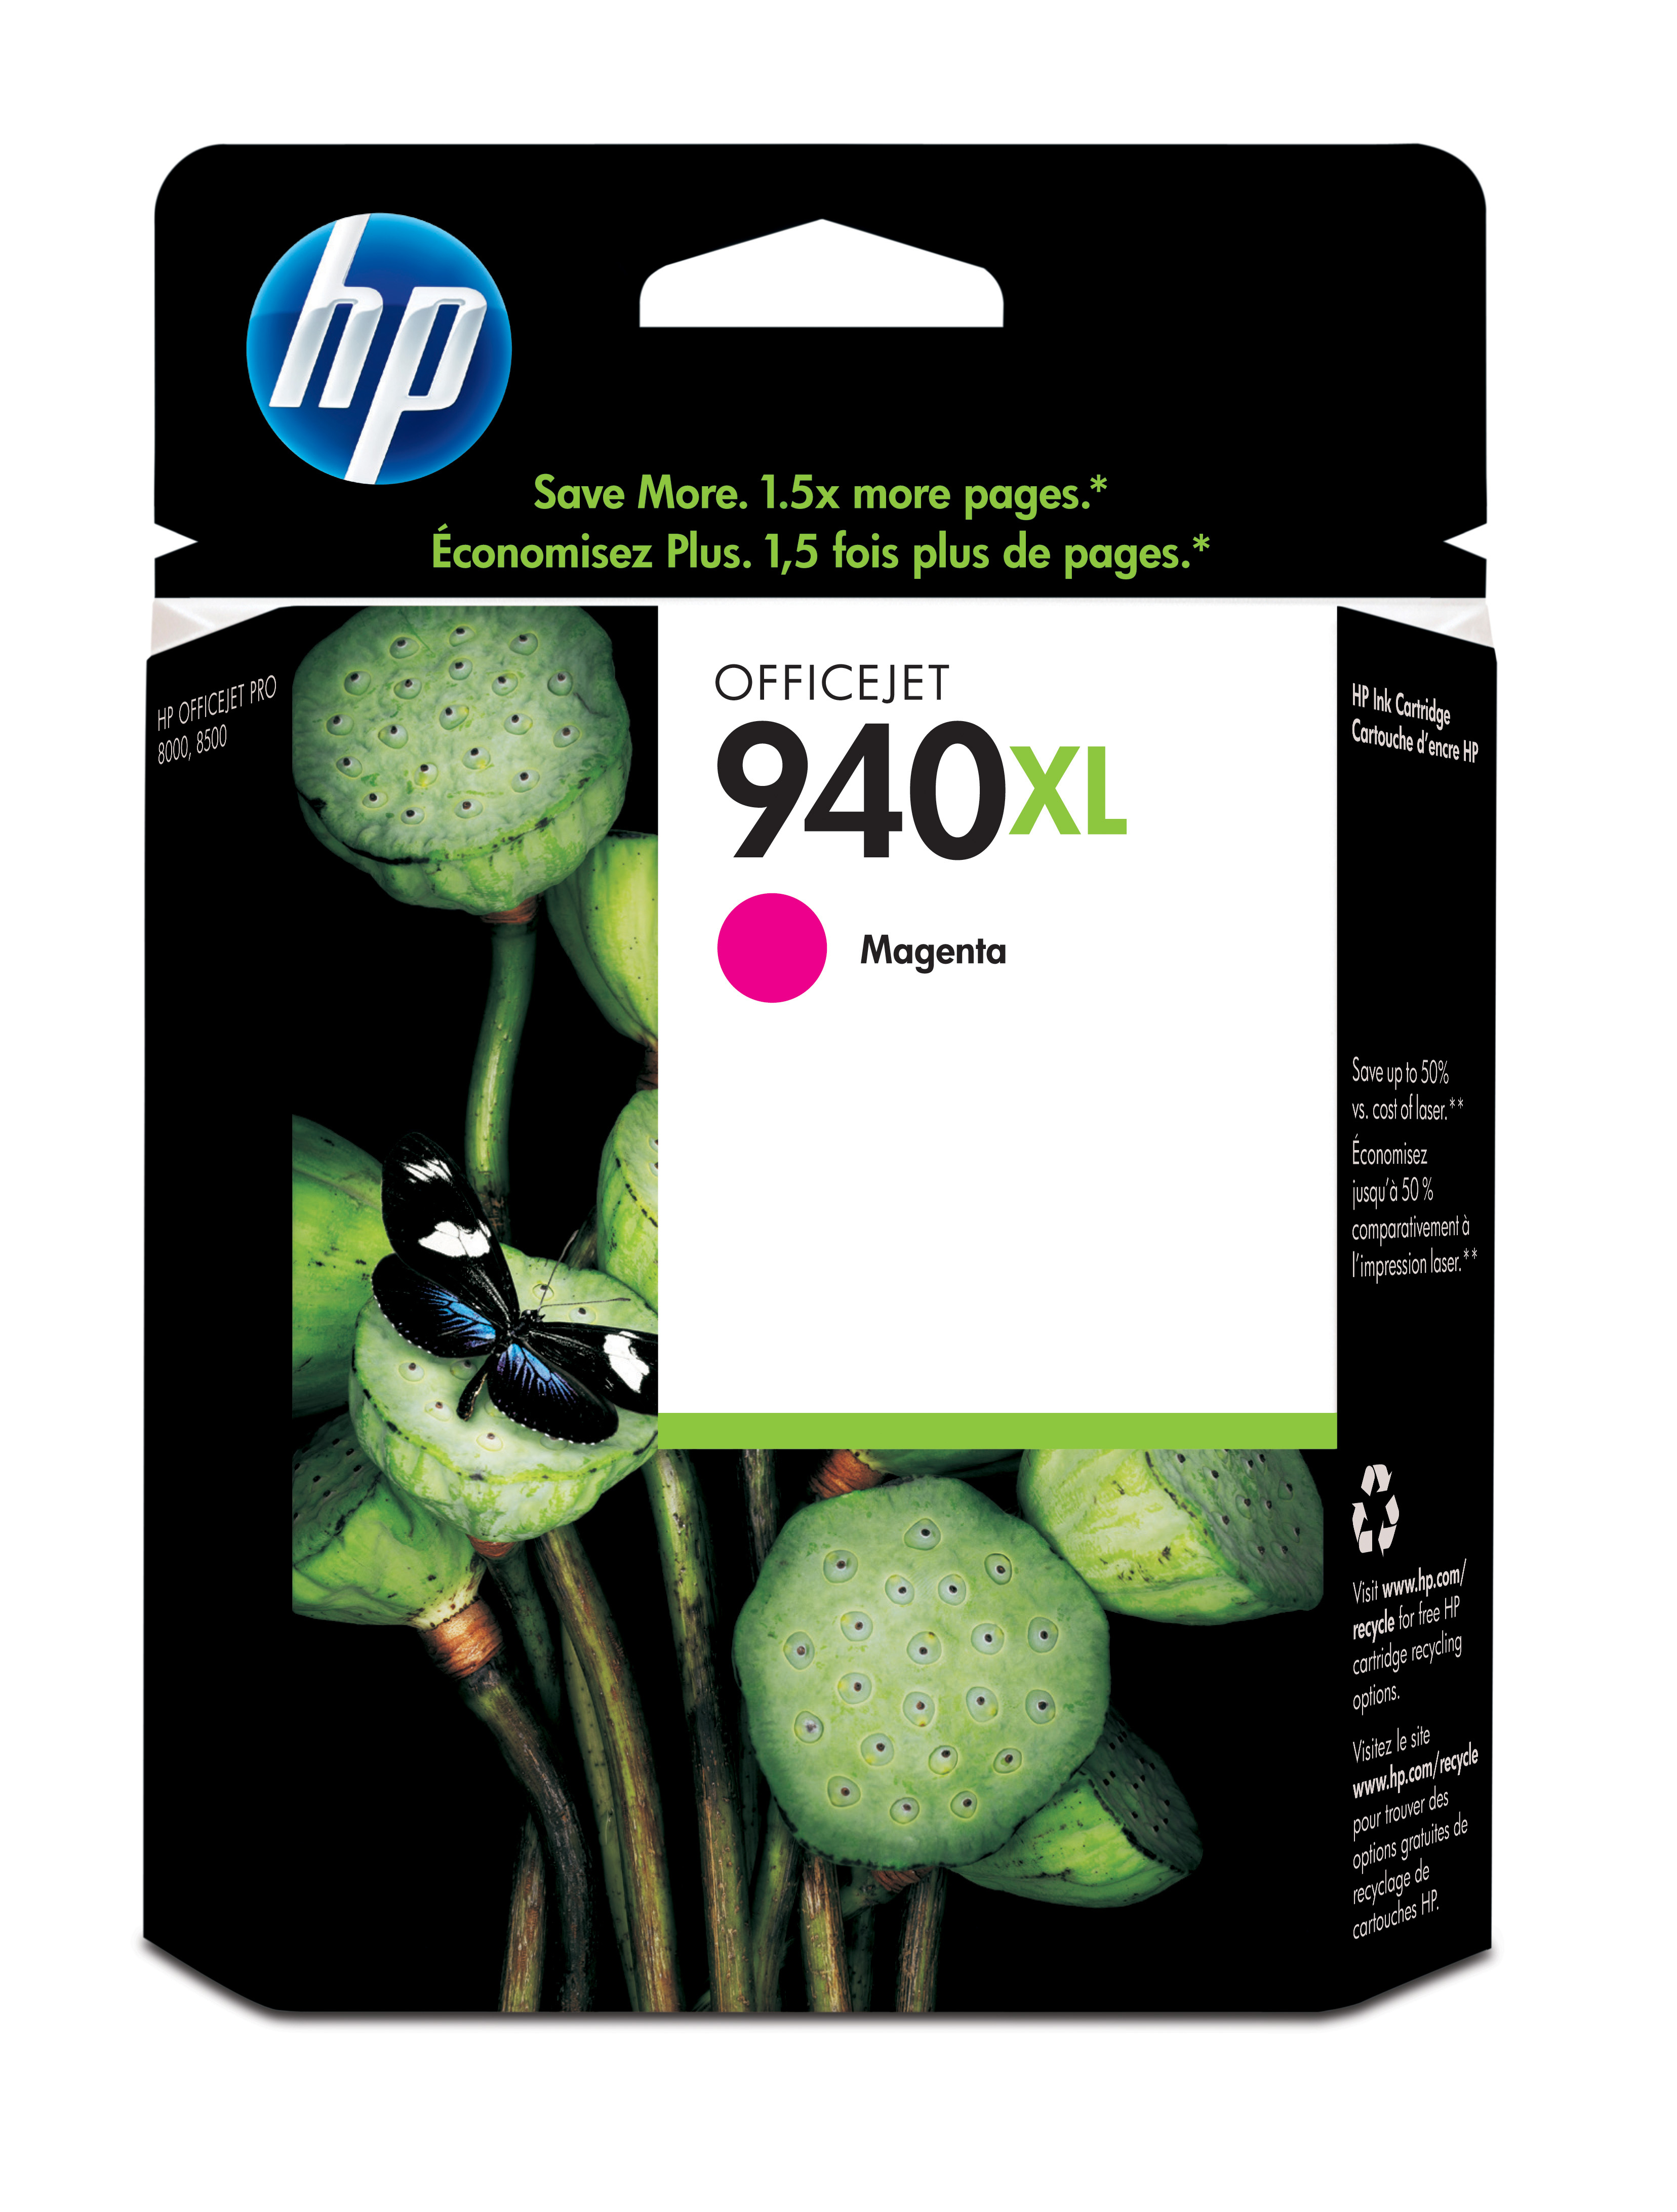 HP 940XL Magenta Officejet Ink Cartridge Genuine HP Inkjet